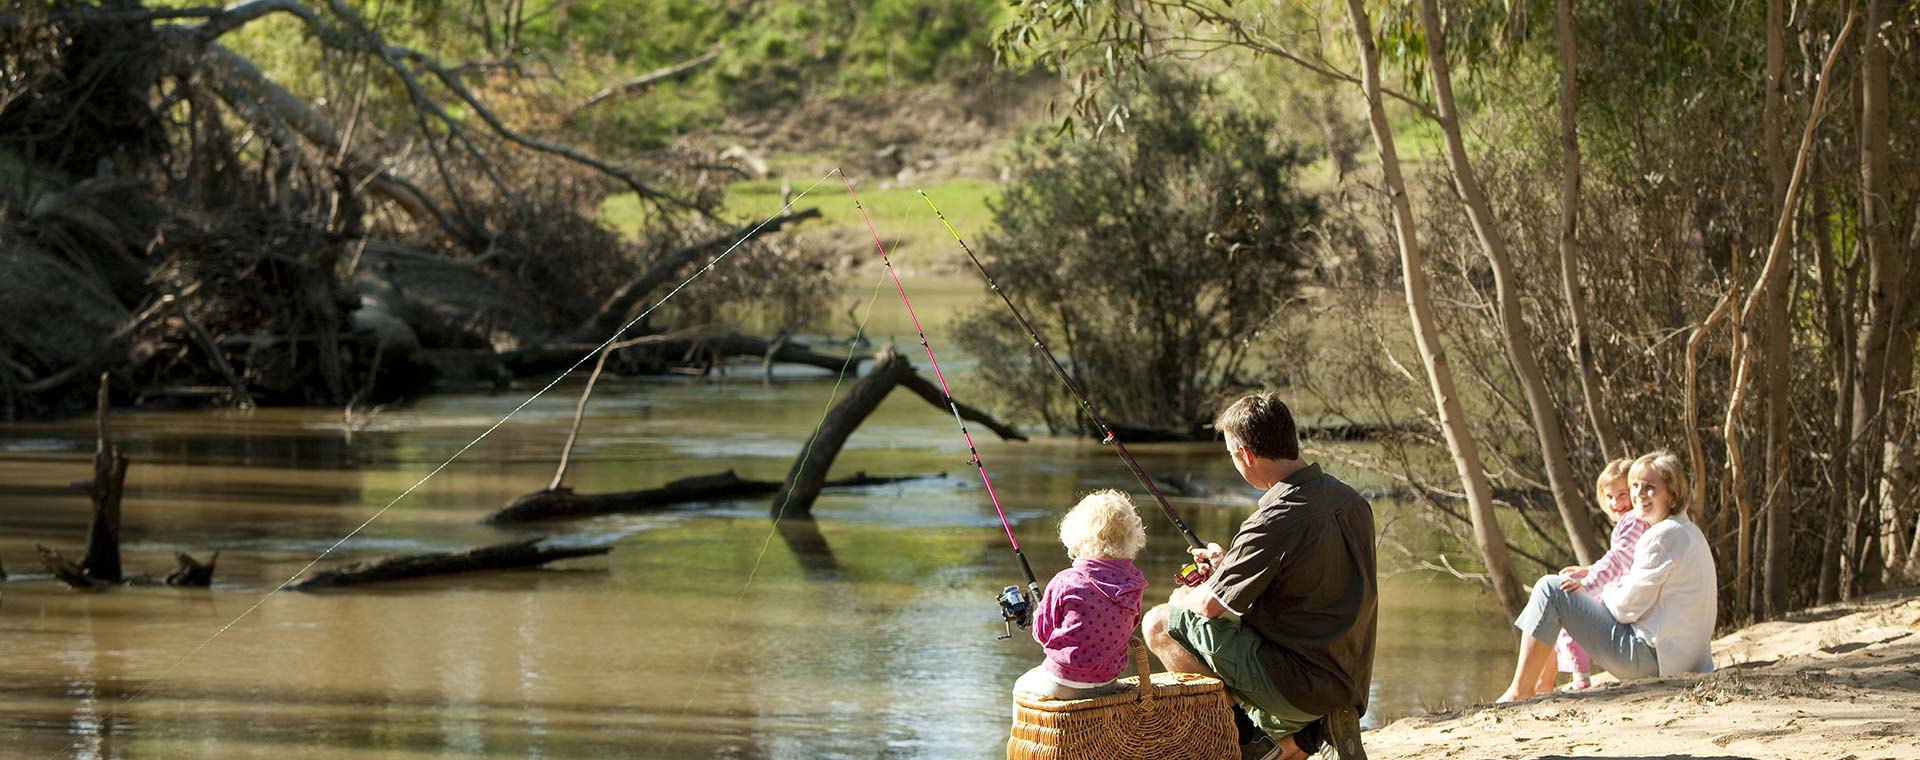 Family enjoying a fishing picnic by the river.